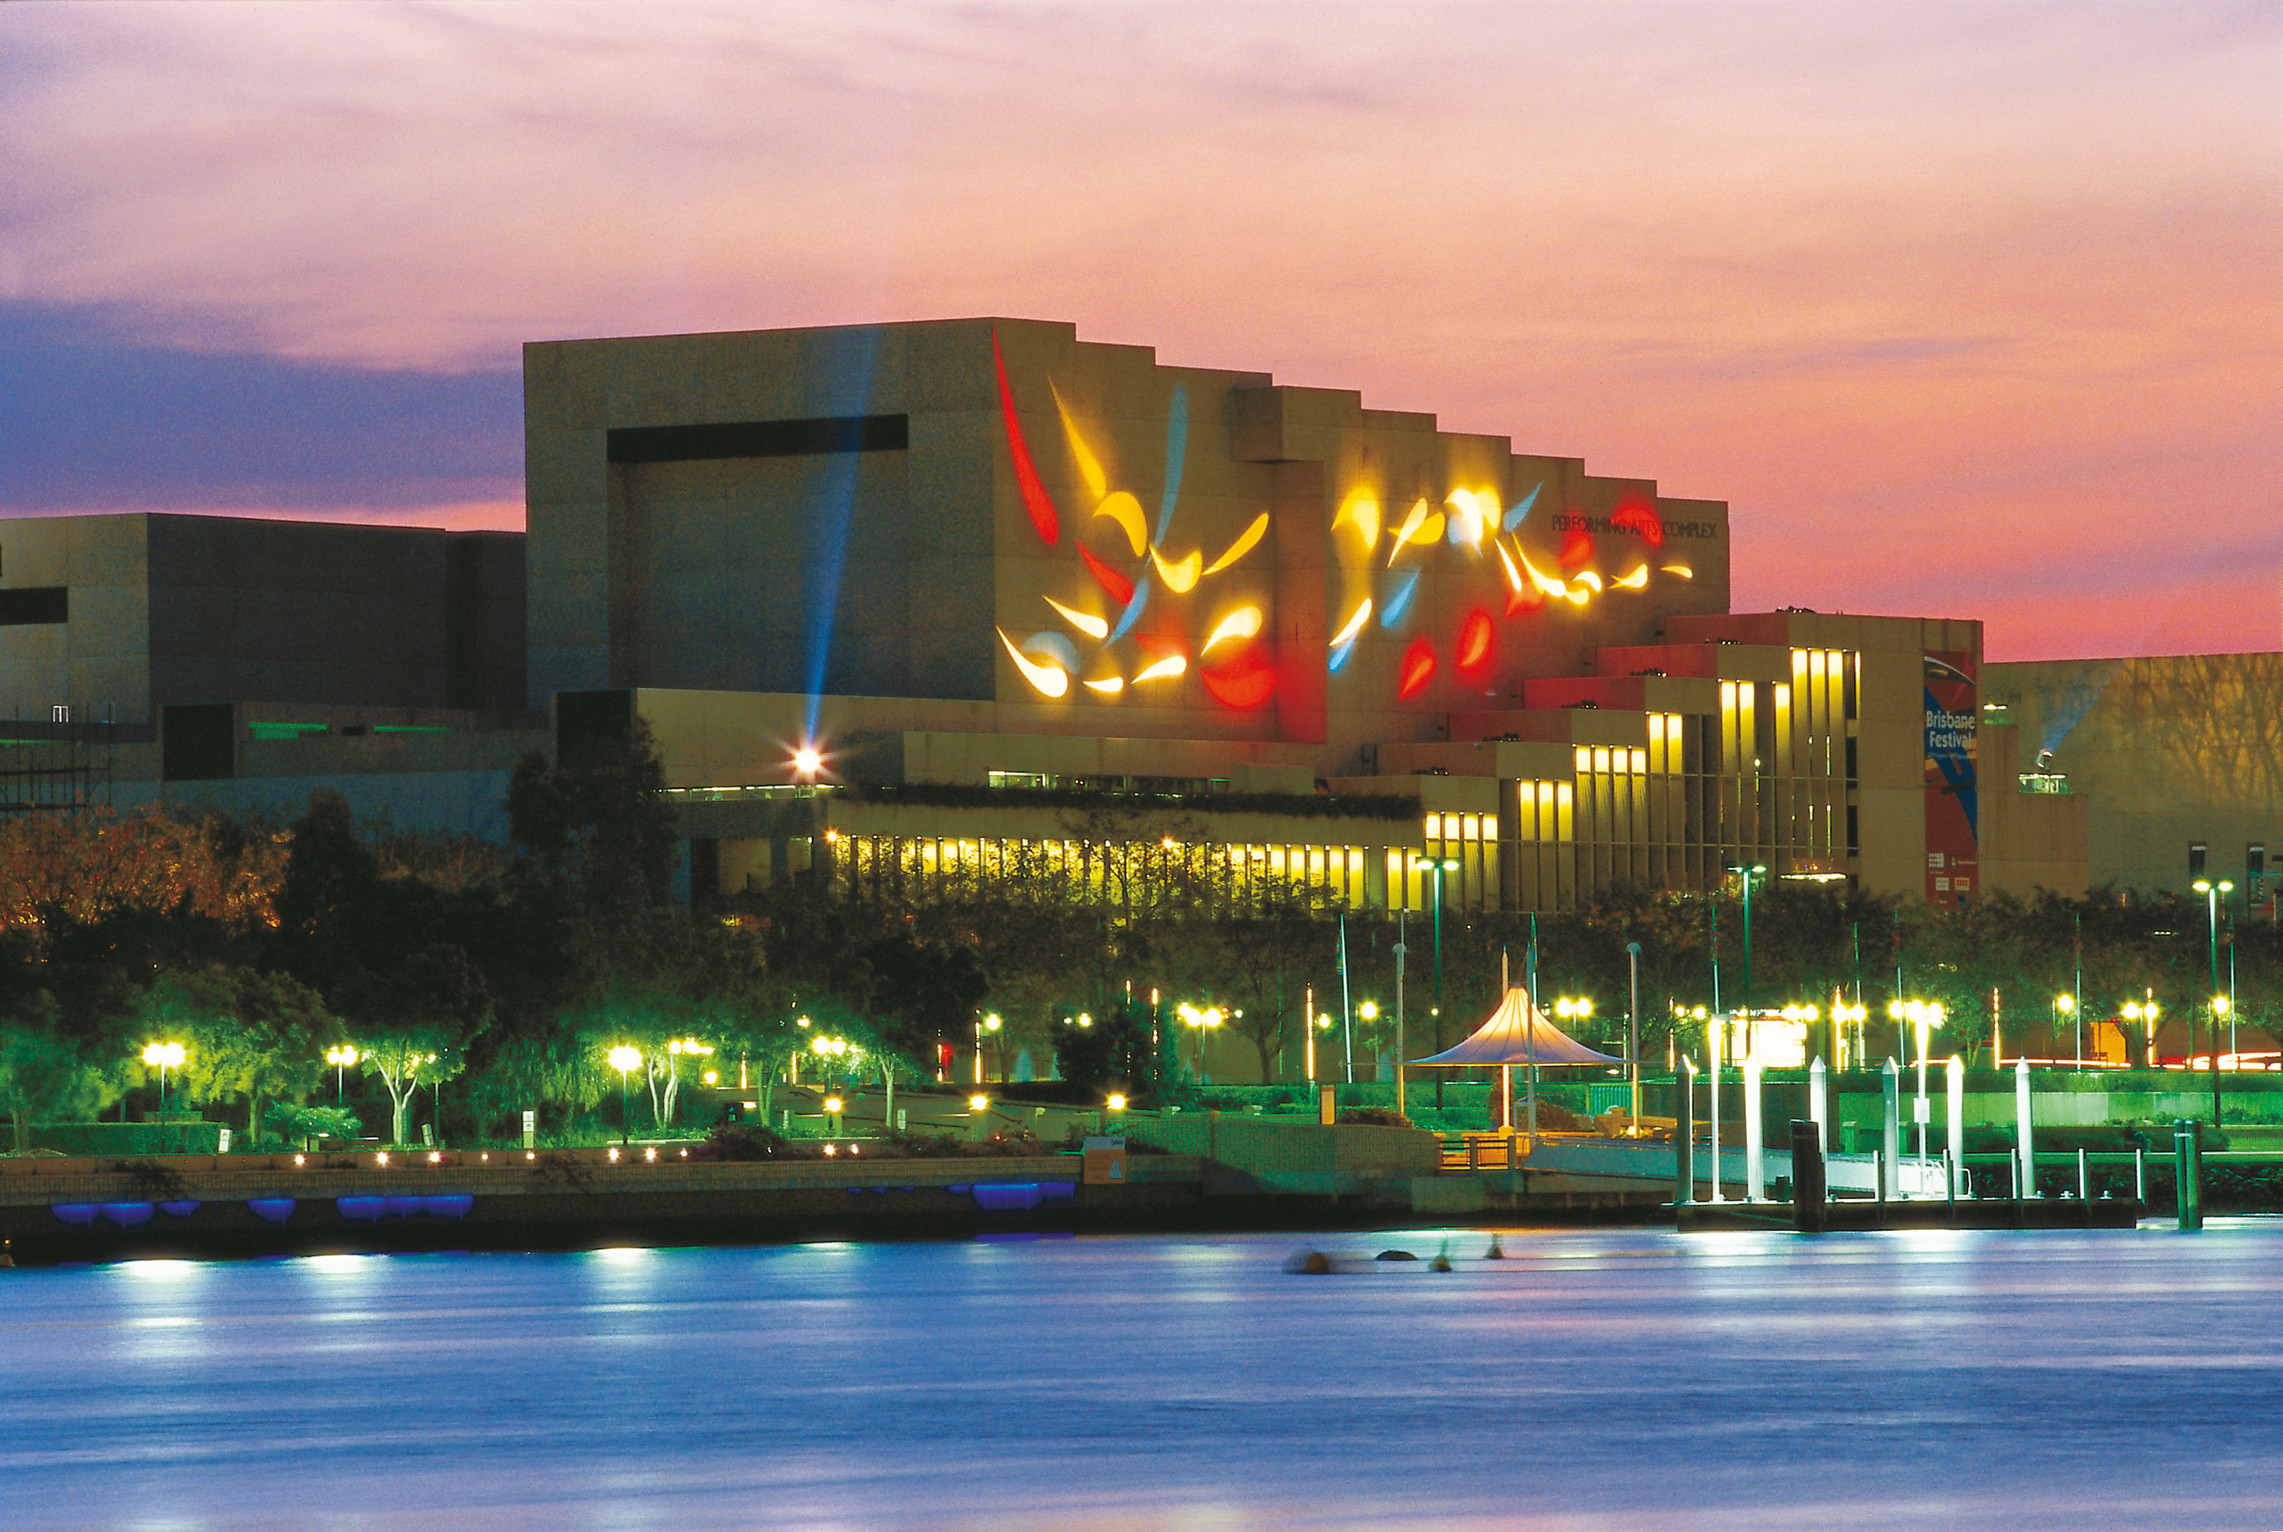 Queensland Performing Arts Centre in Brisbane